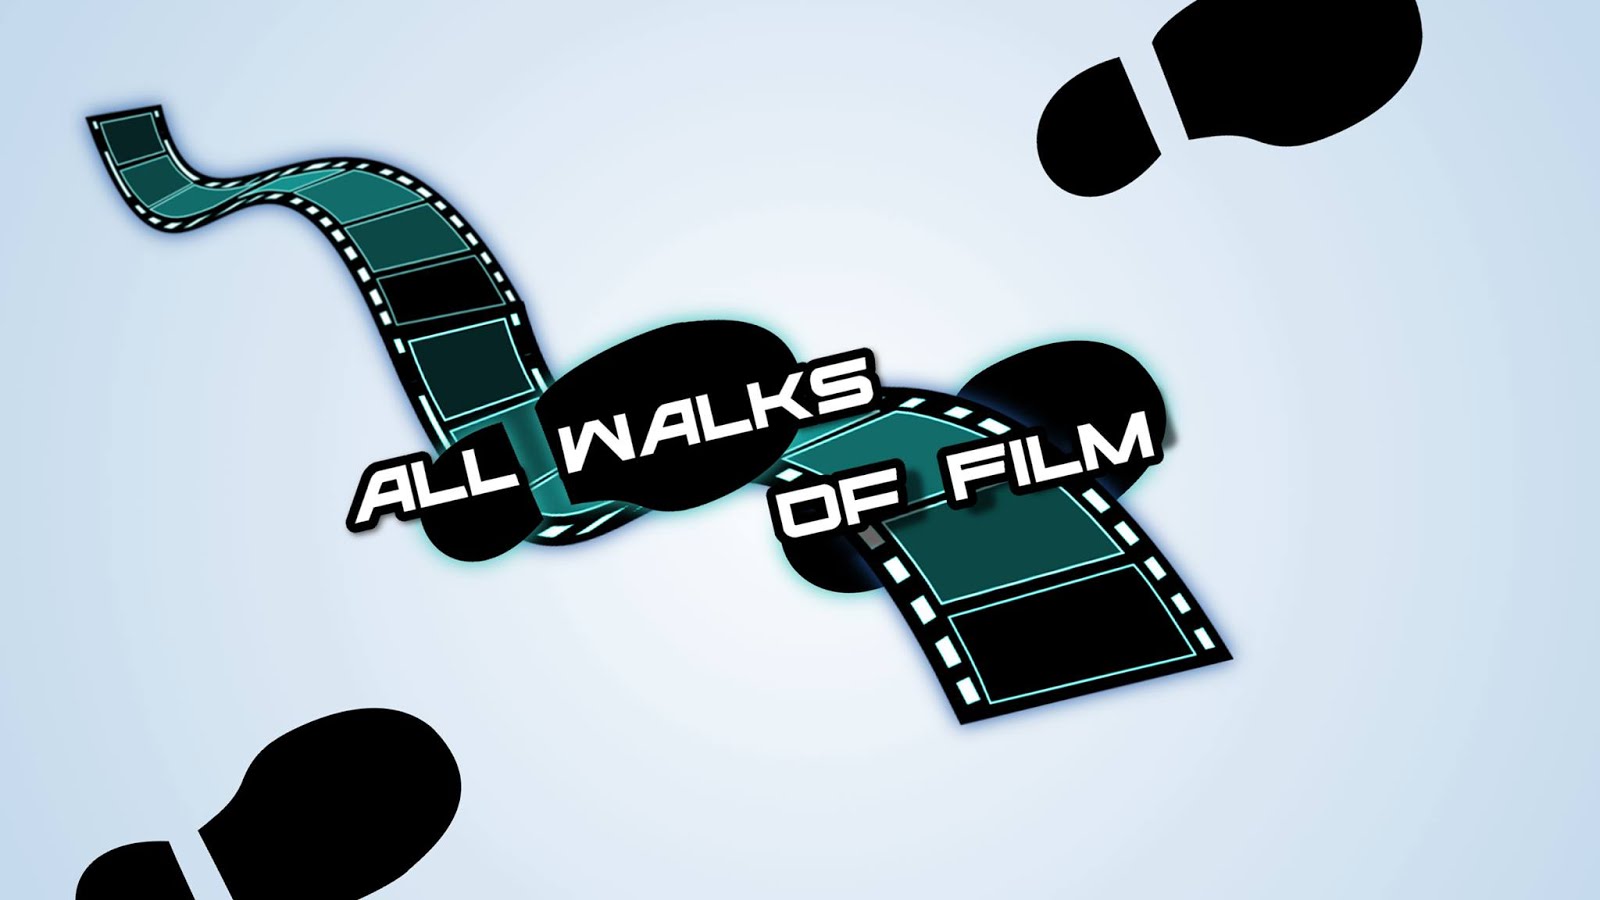 All Walks of Film